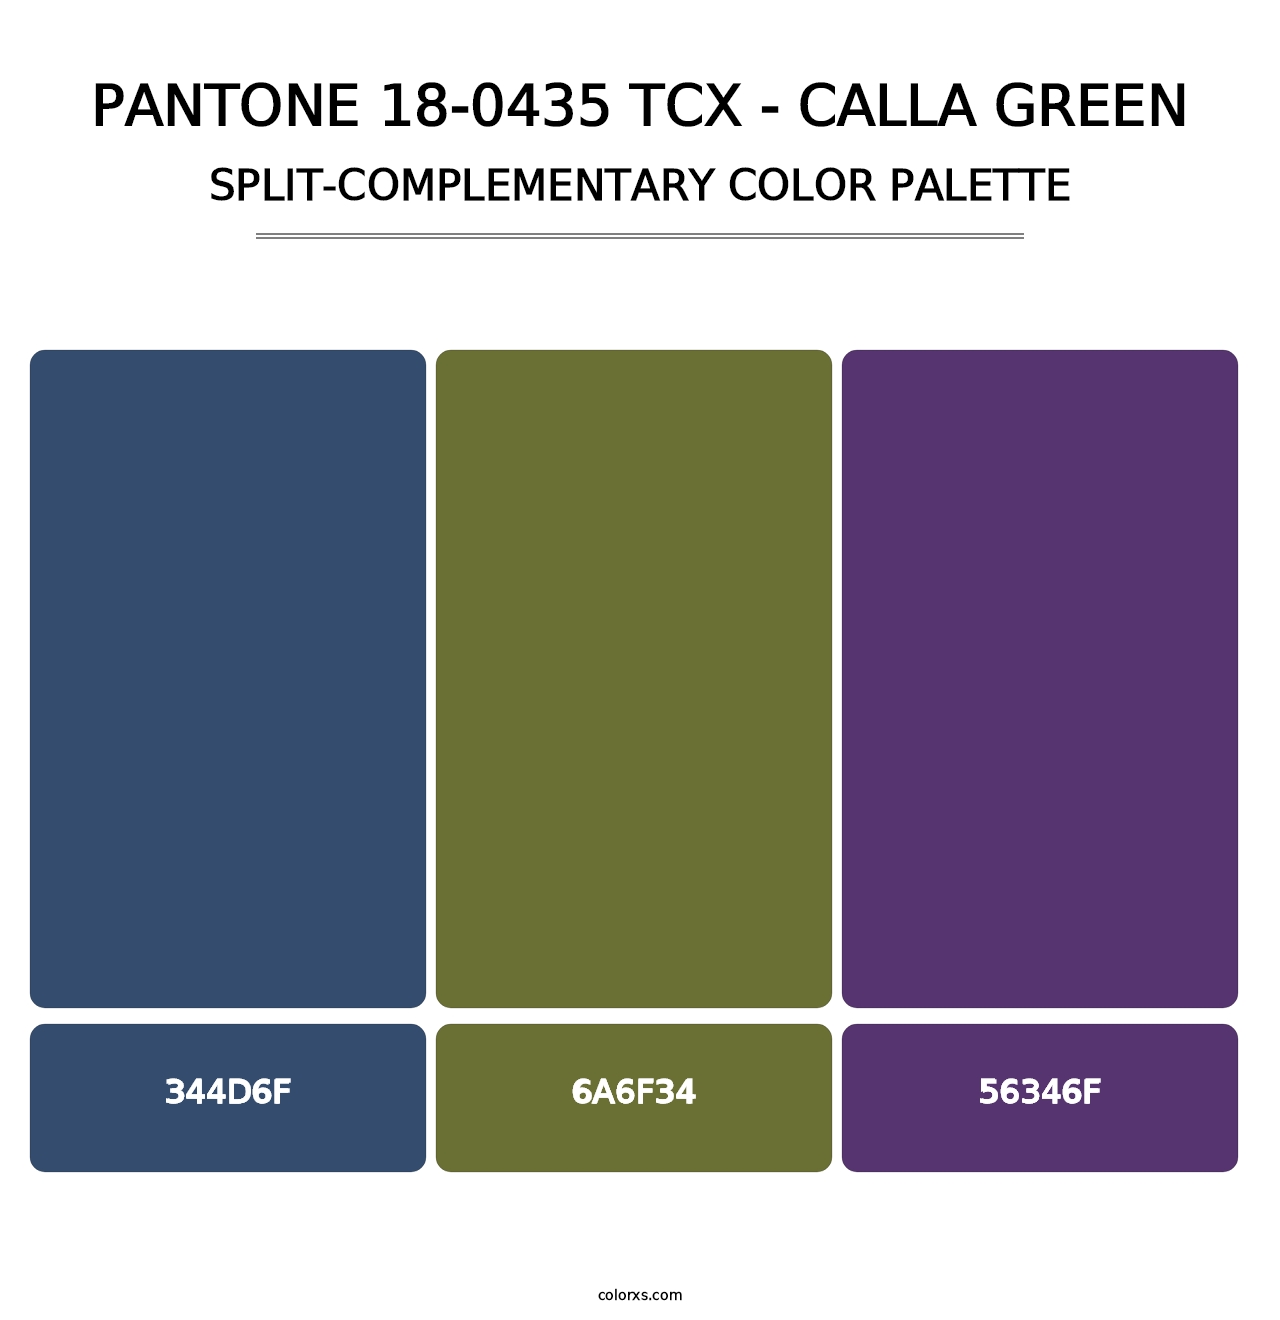 PANTONE 18-0435 TCX - Calla Green - Split-Complementary Color Palette